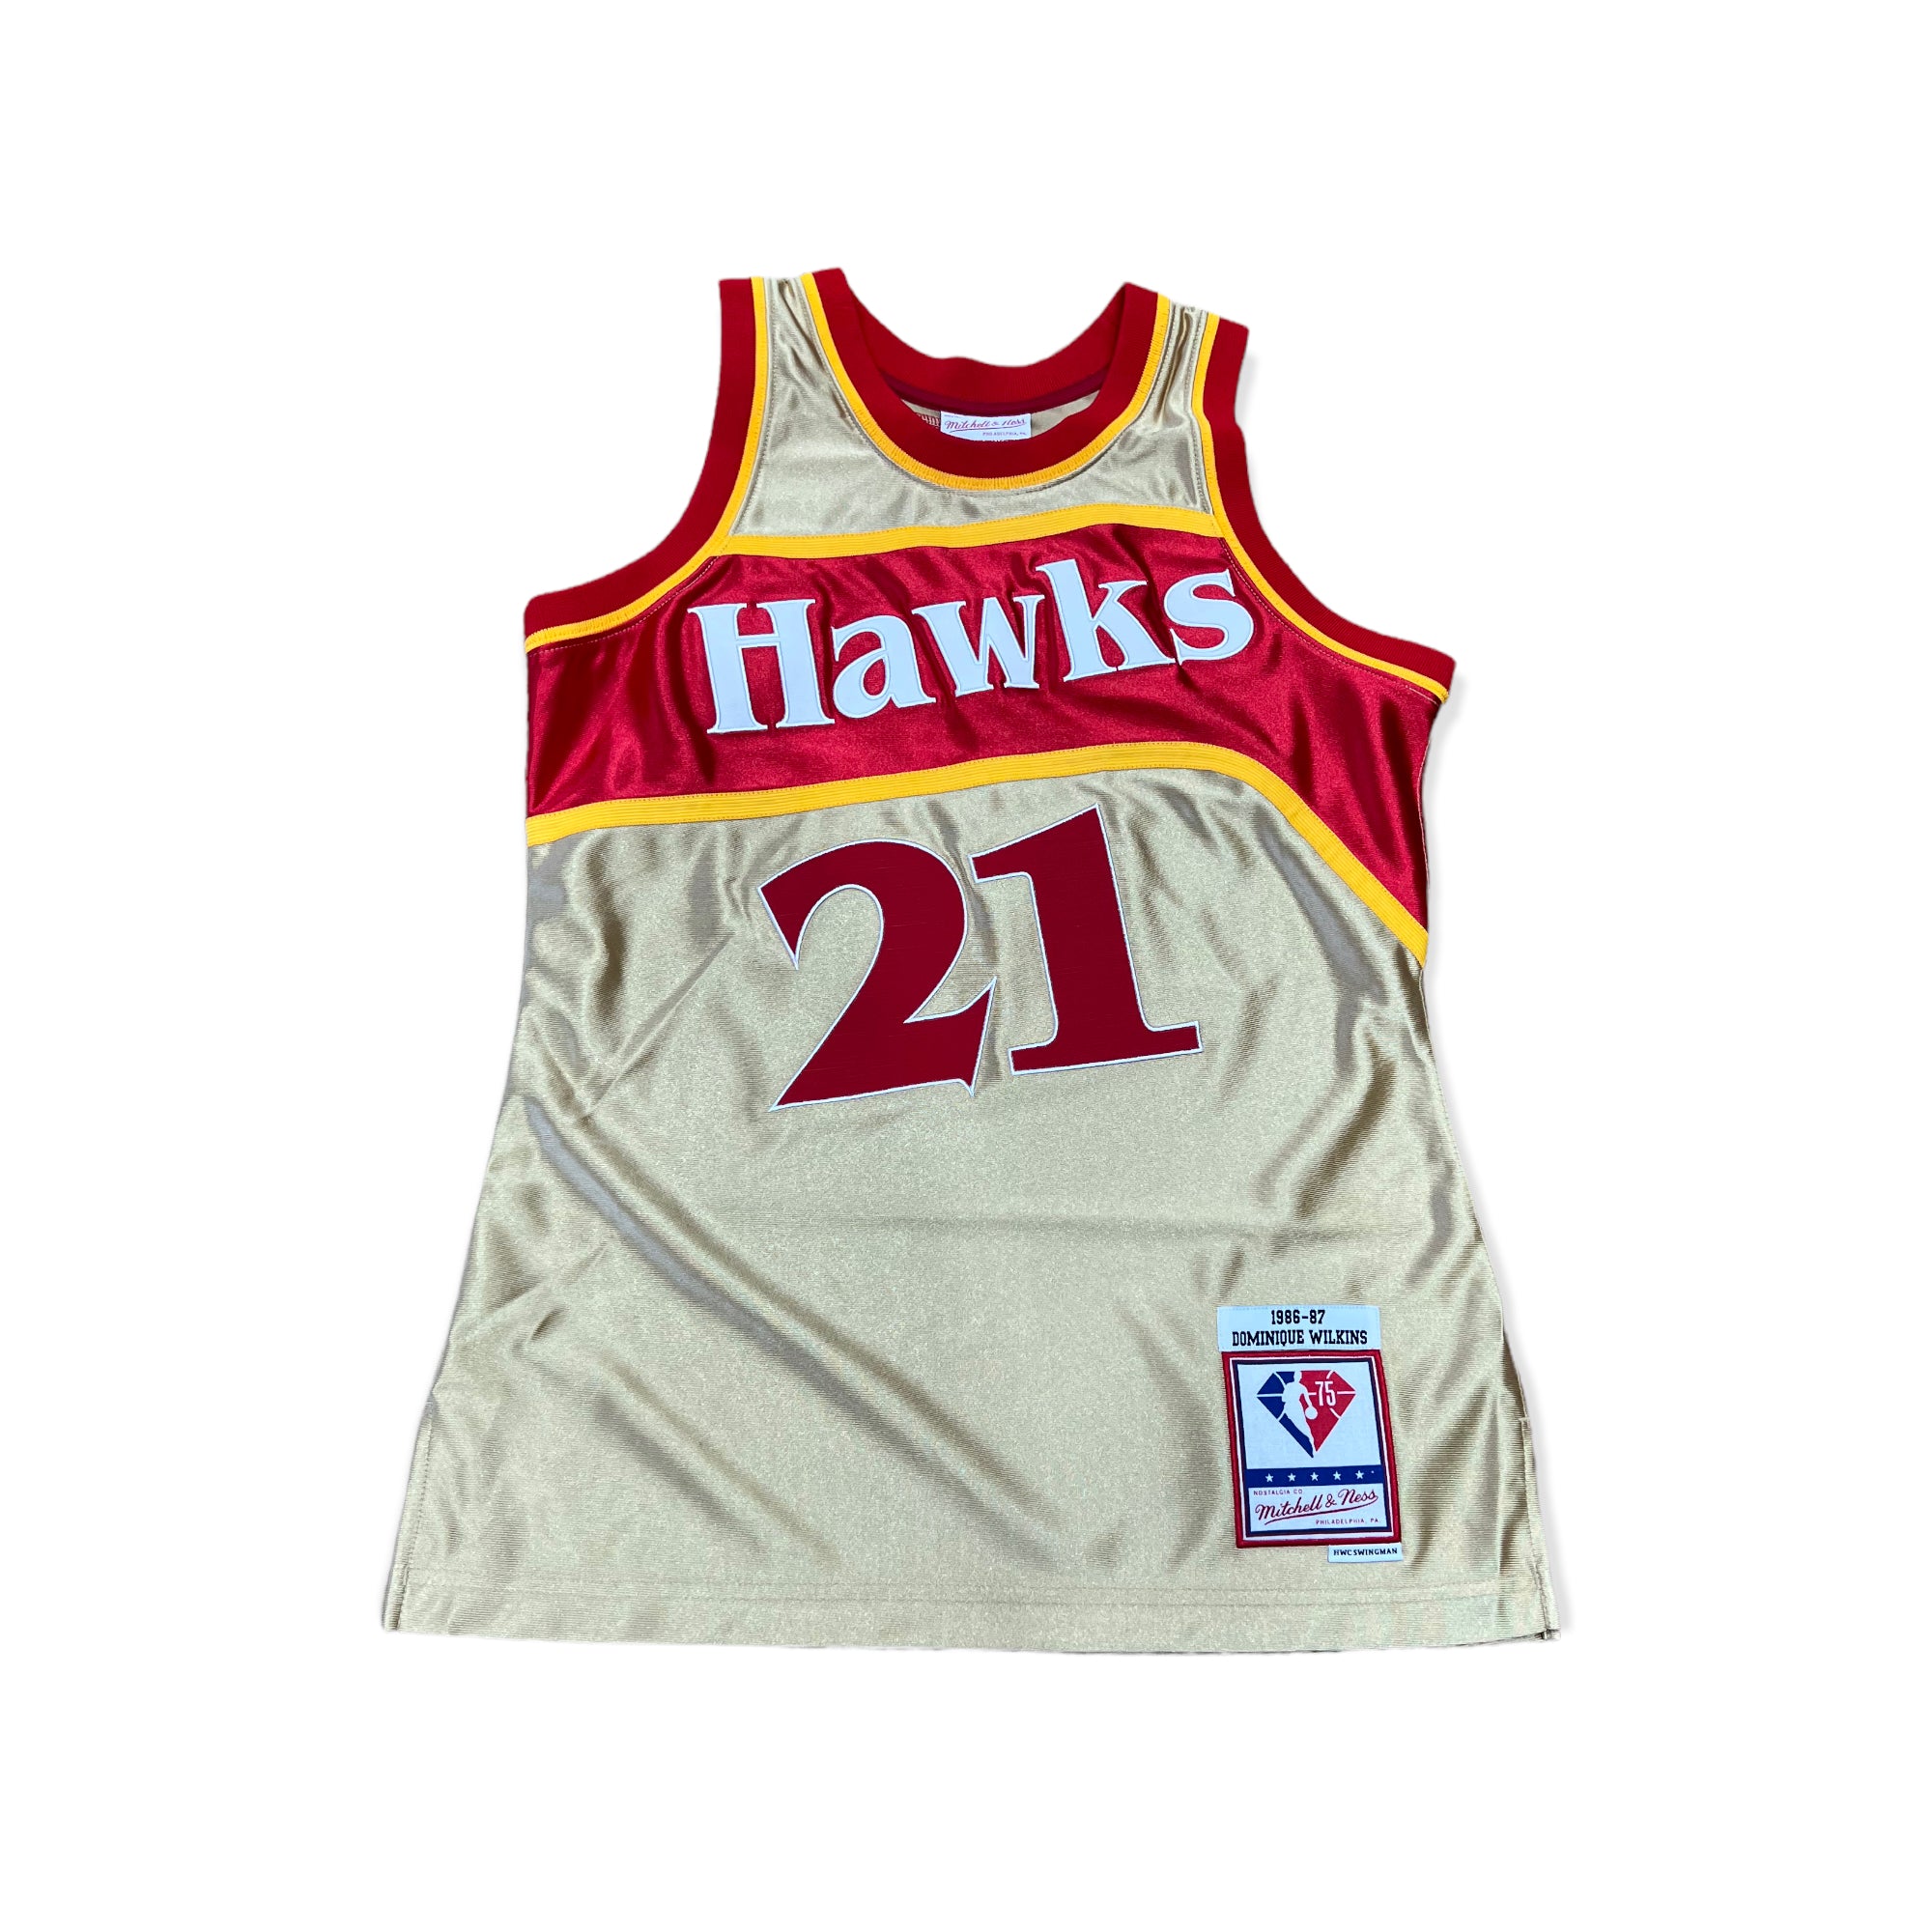 MITCHELL & NESS: Hawks 75th Anniversary Wilkins